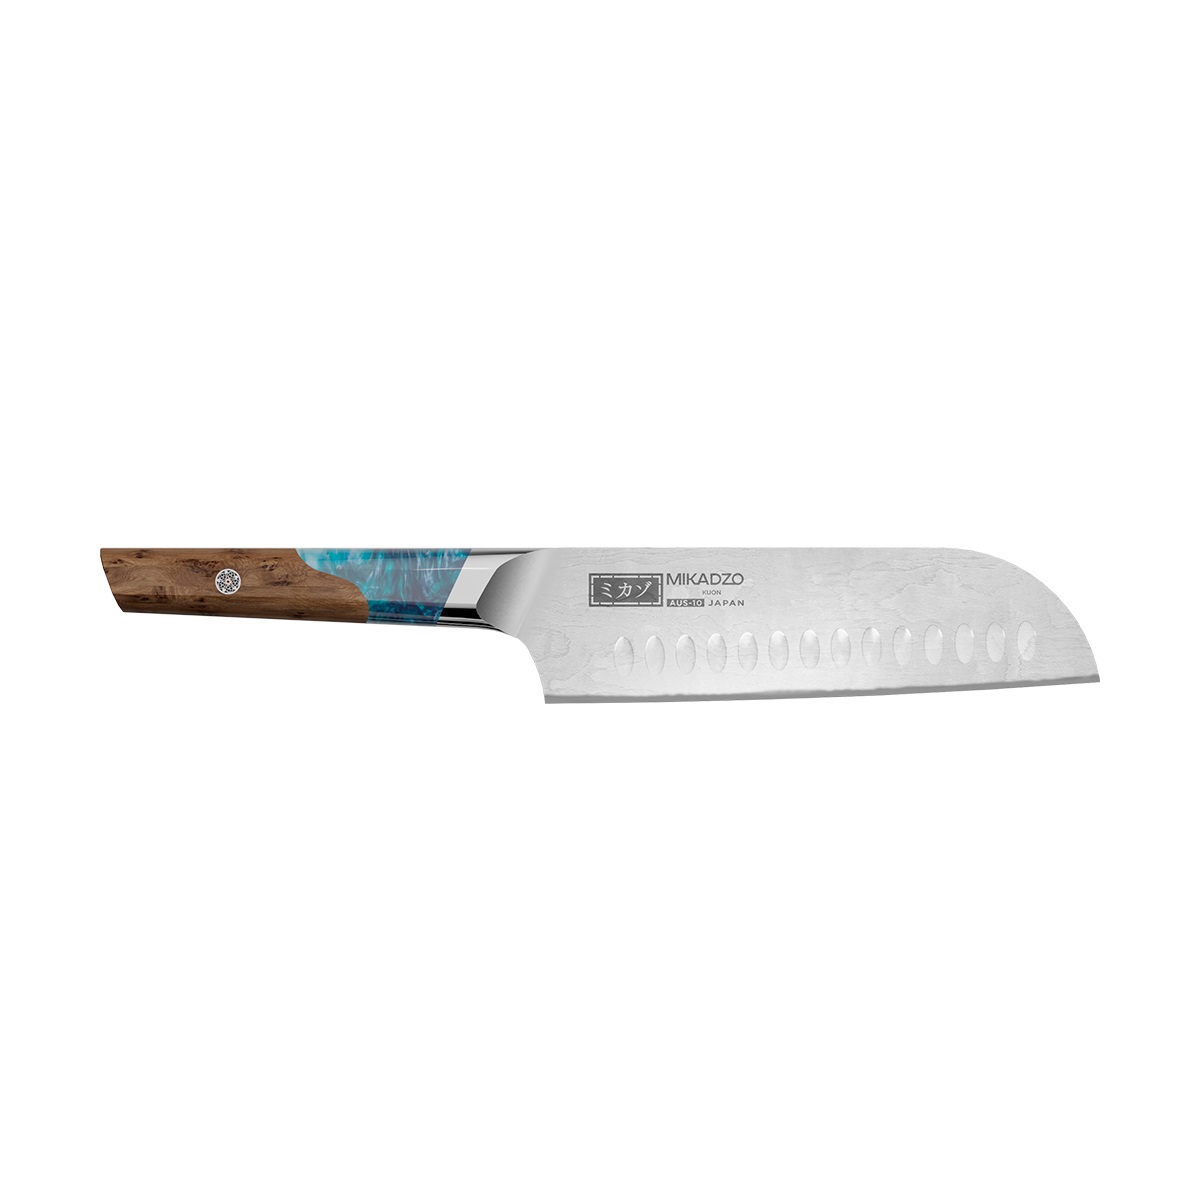 Кухонный нож Omoikiri Damascus Kuon 4992036 кухонный нож omoikiri micadzo imari bl 4992022